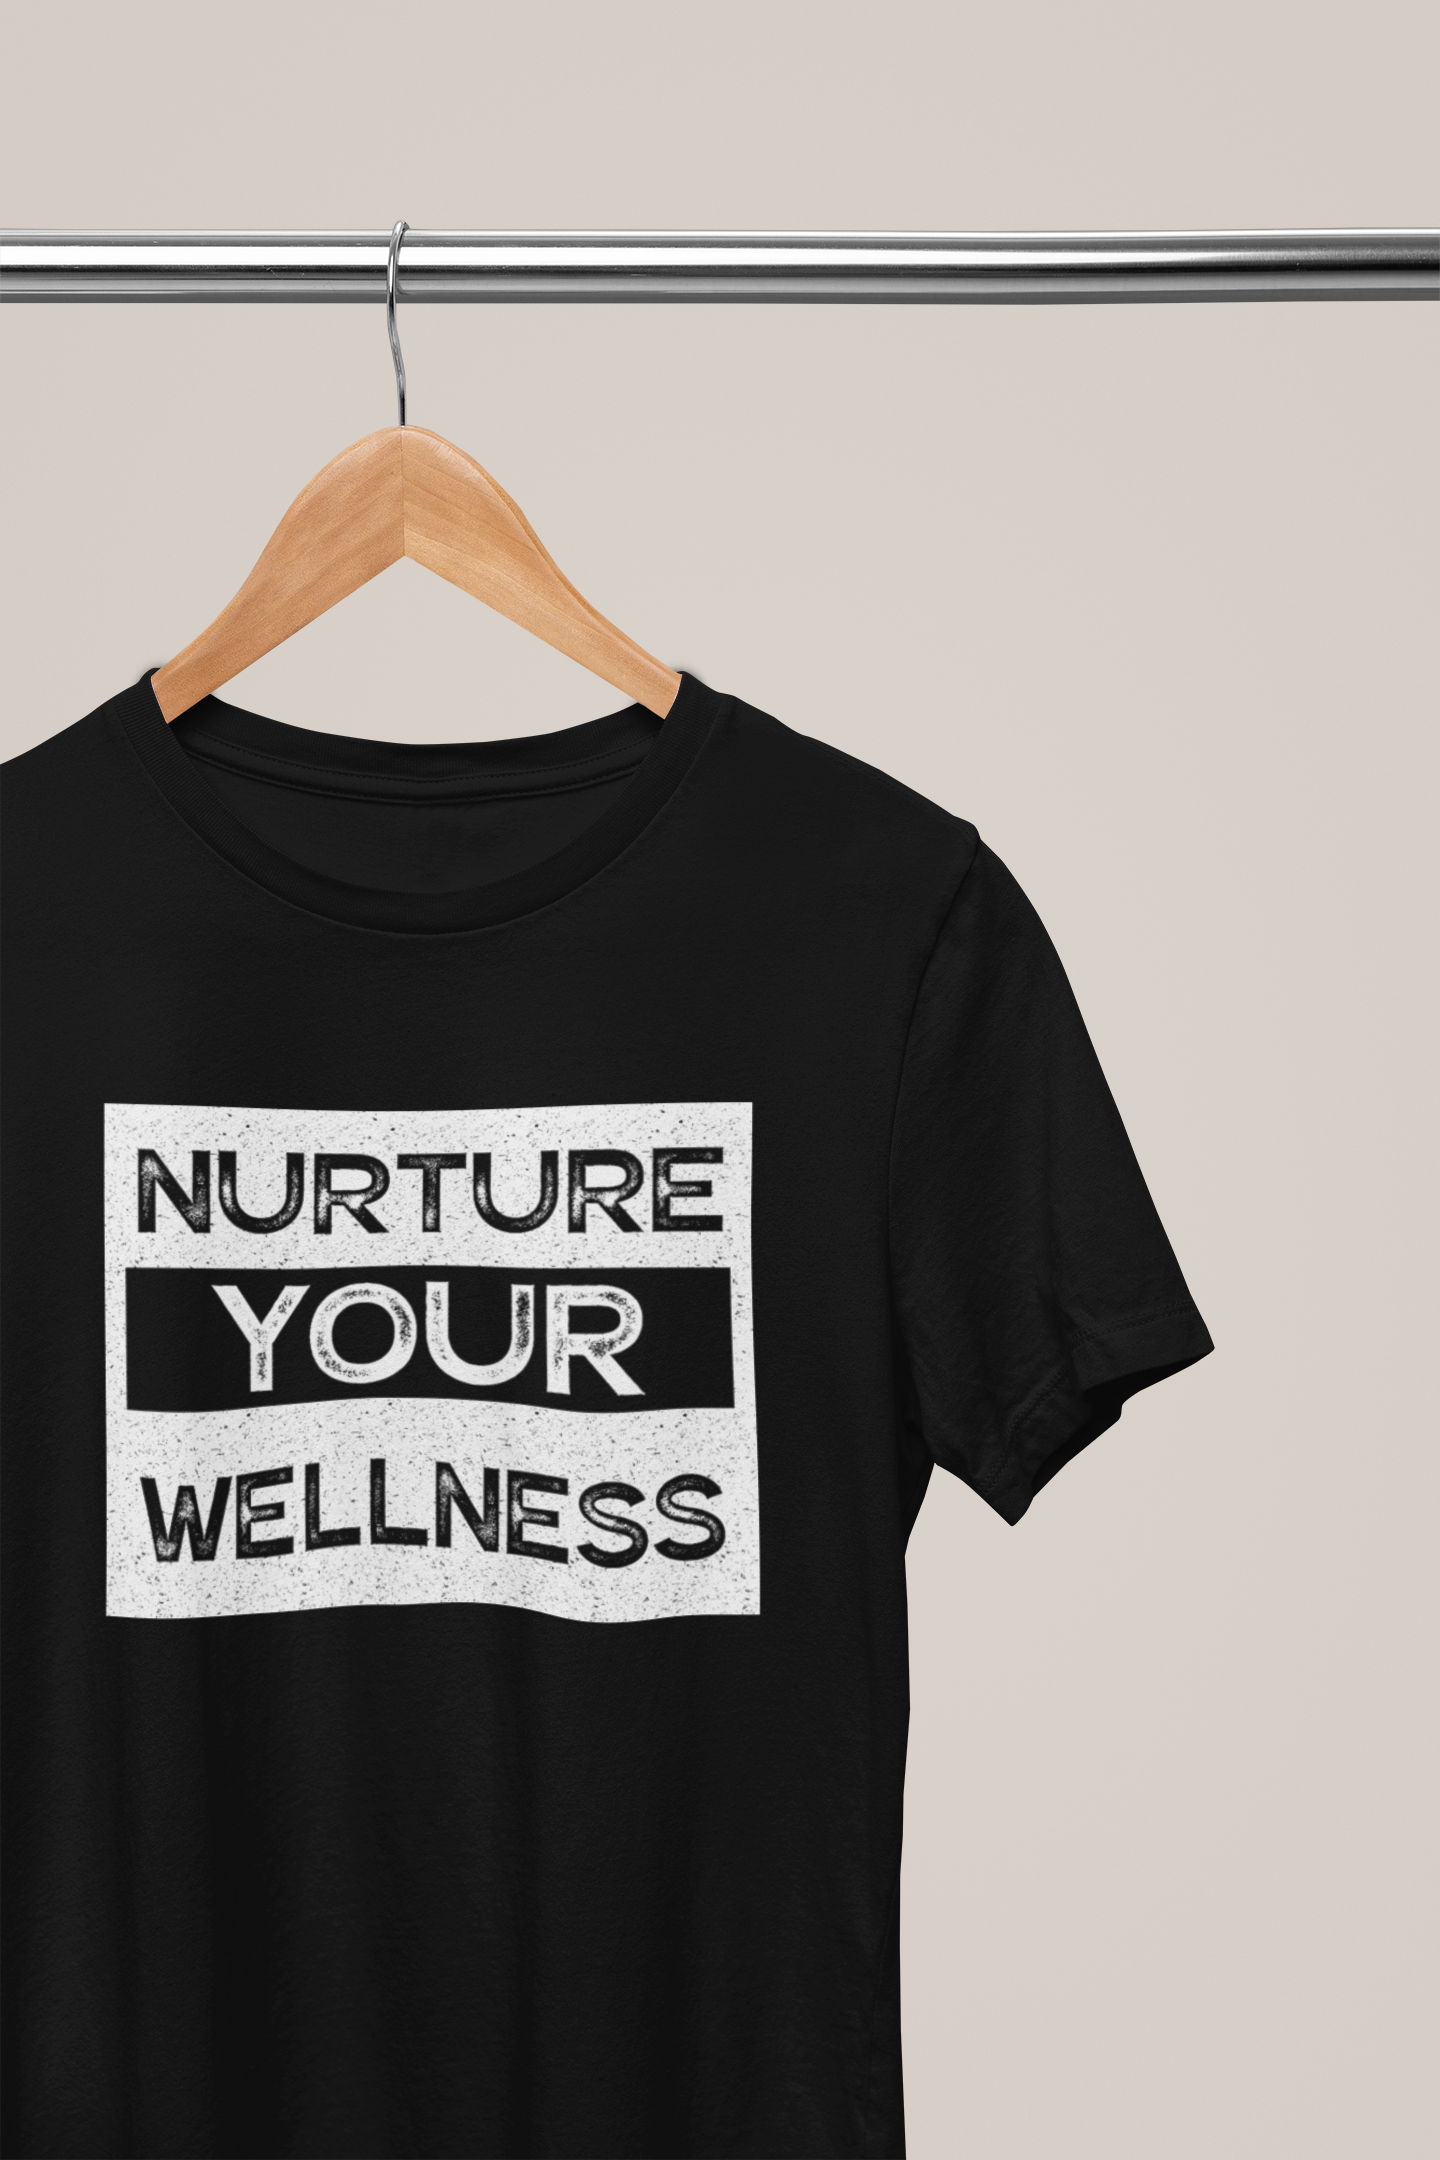 Nurture Your Wellness, Hoodies, Sweatshirts, Tees, and Mugs